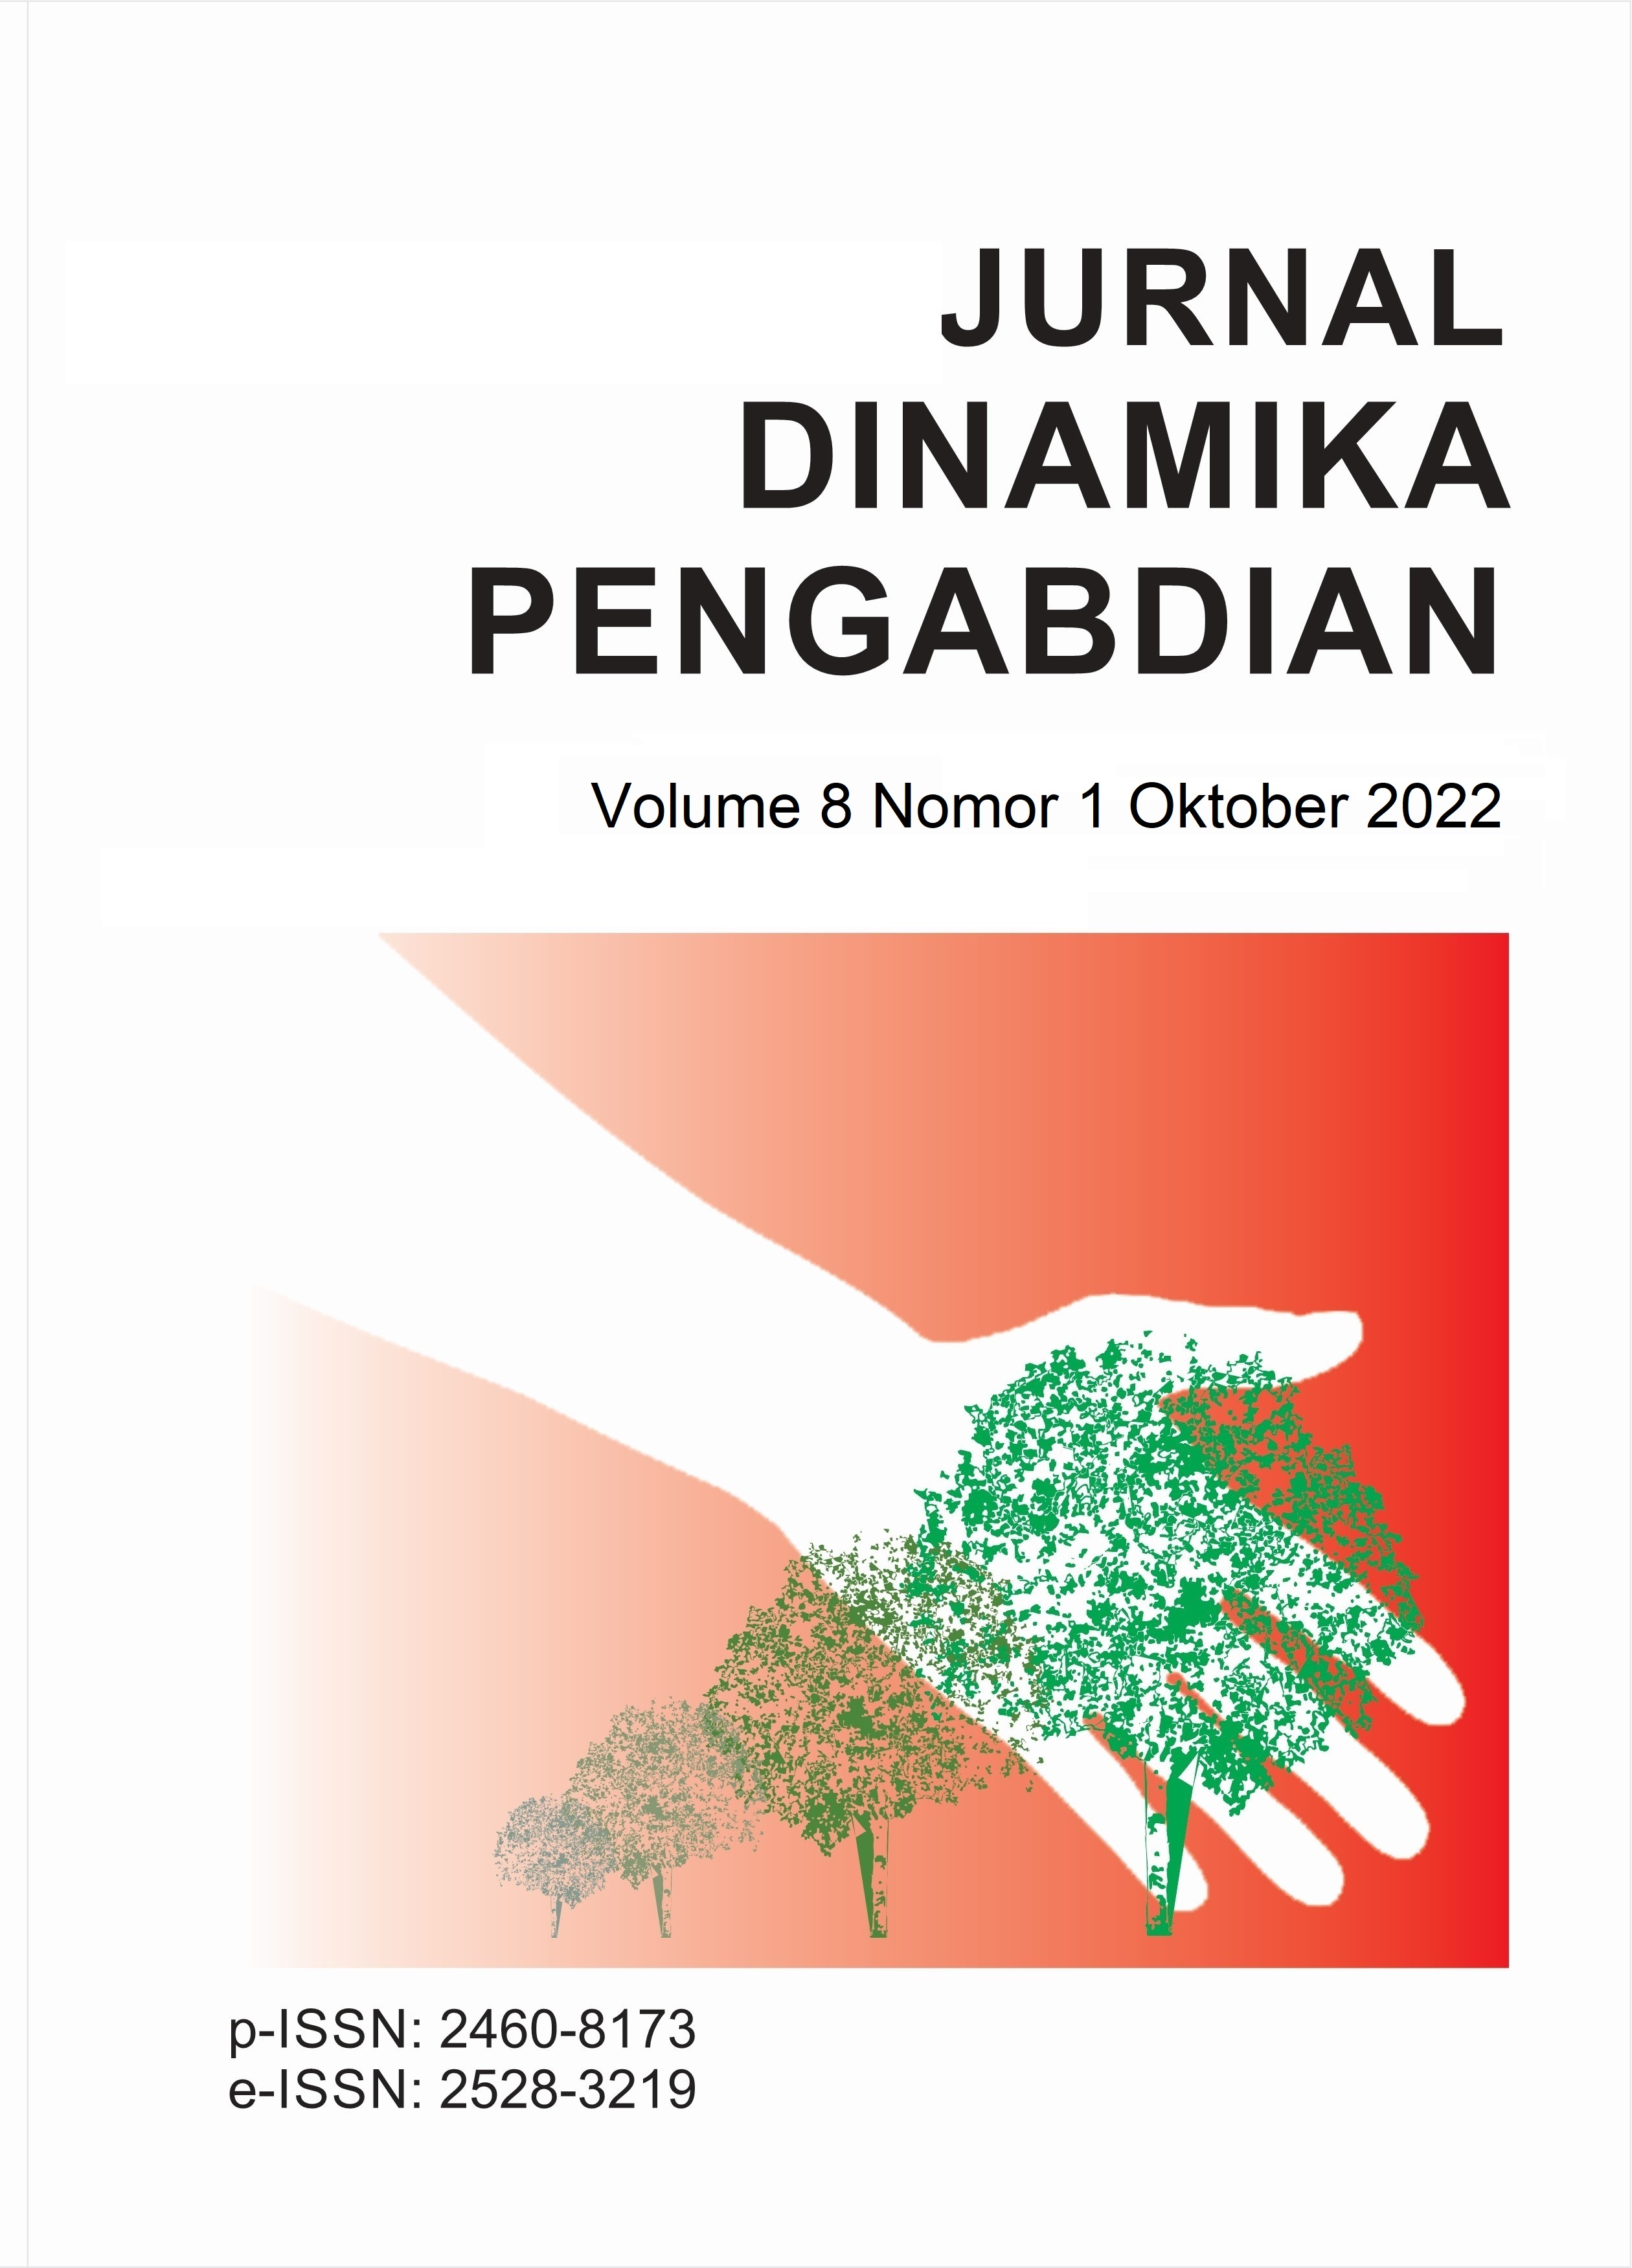 					View Vol. 8 No. 1 (2022): JURNAL DINAMIKA PENGABDIAN VOL. 8 NO. 1 OKTOBER 2022
				